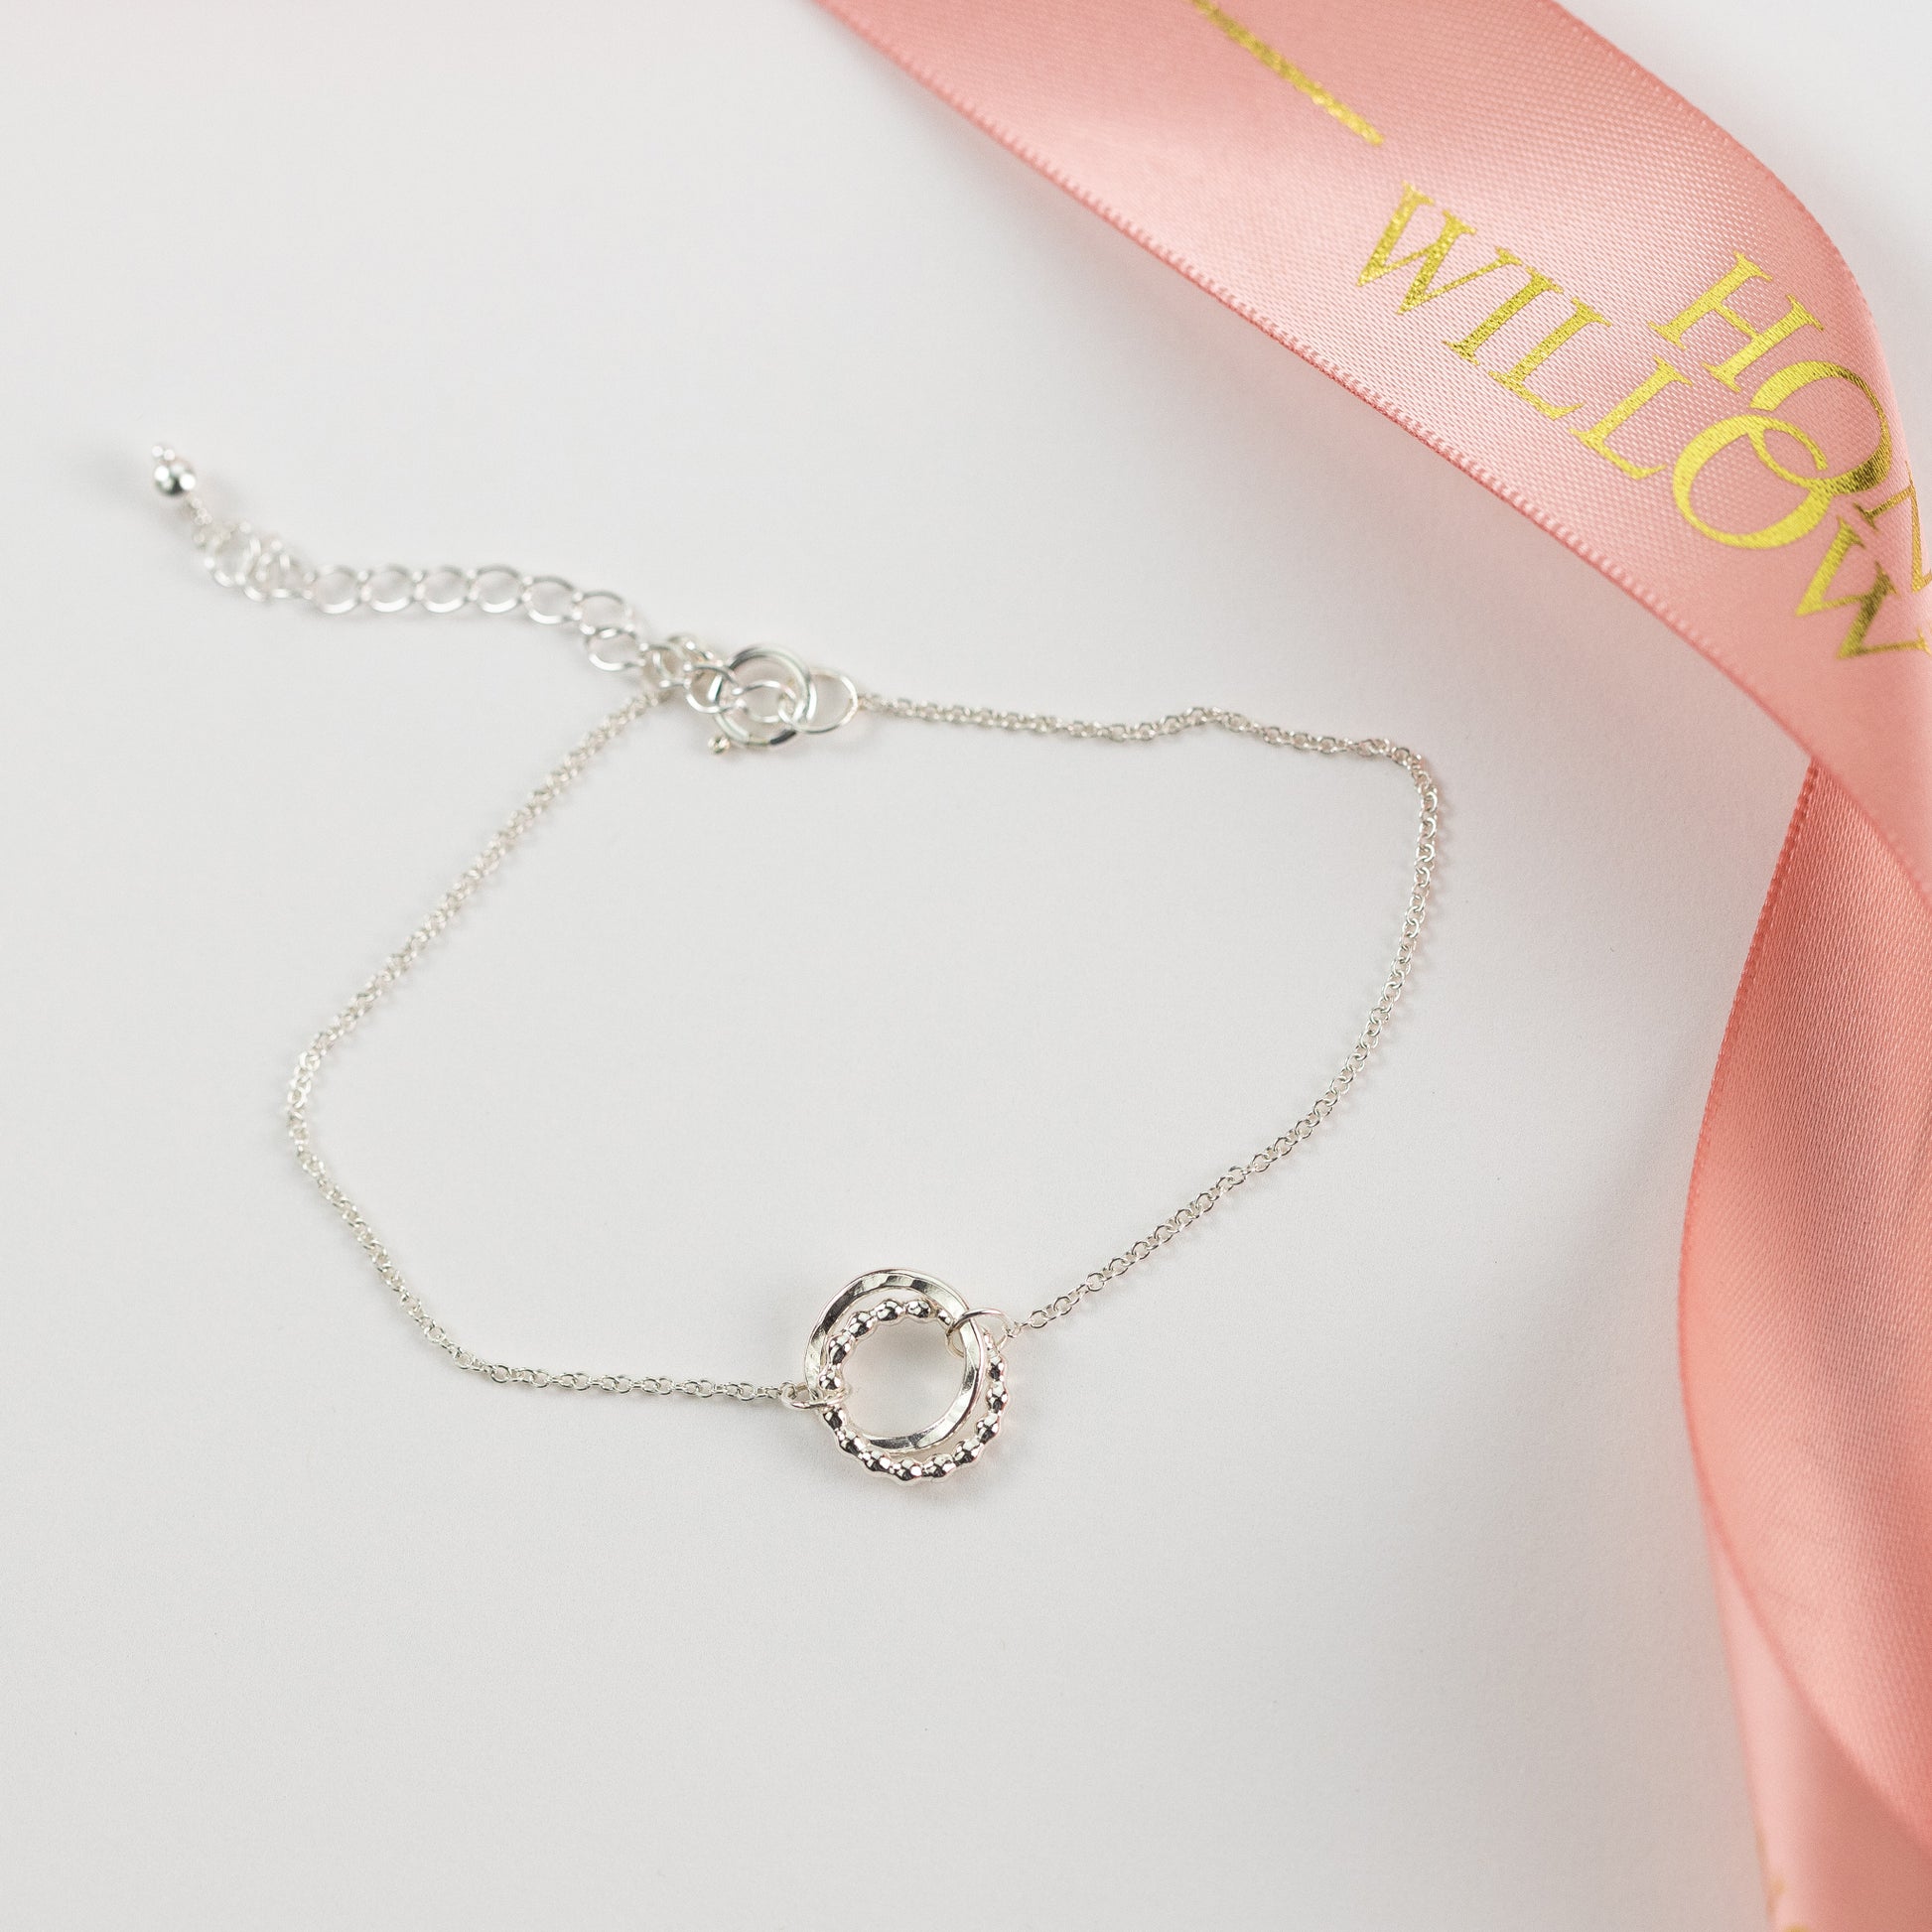 Gift for Friend - Love Knot Bracelet - Silver